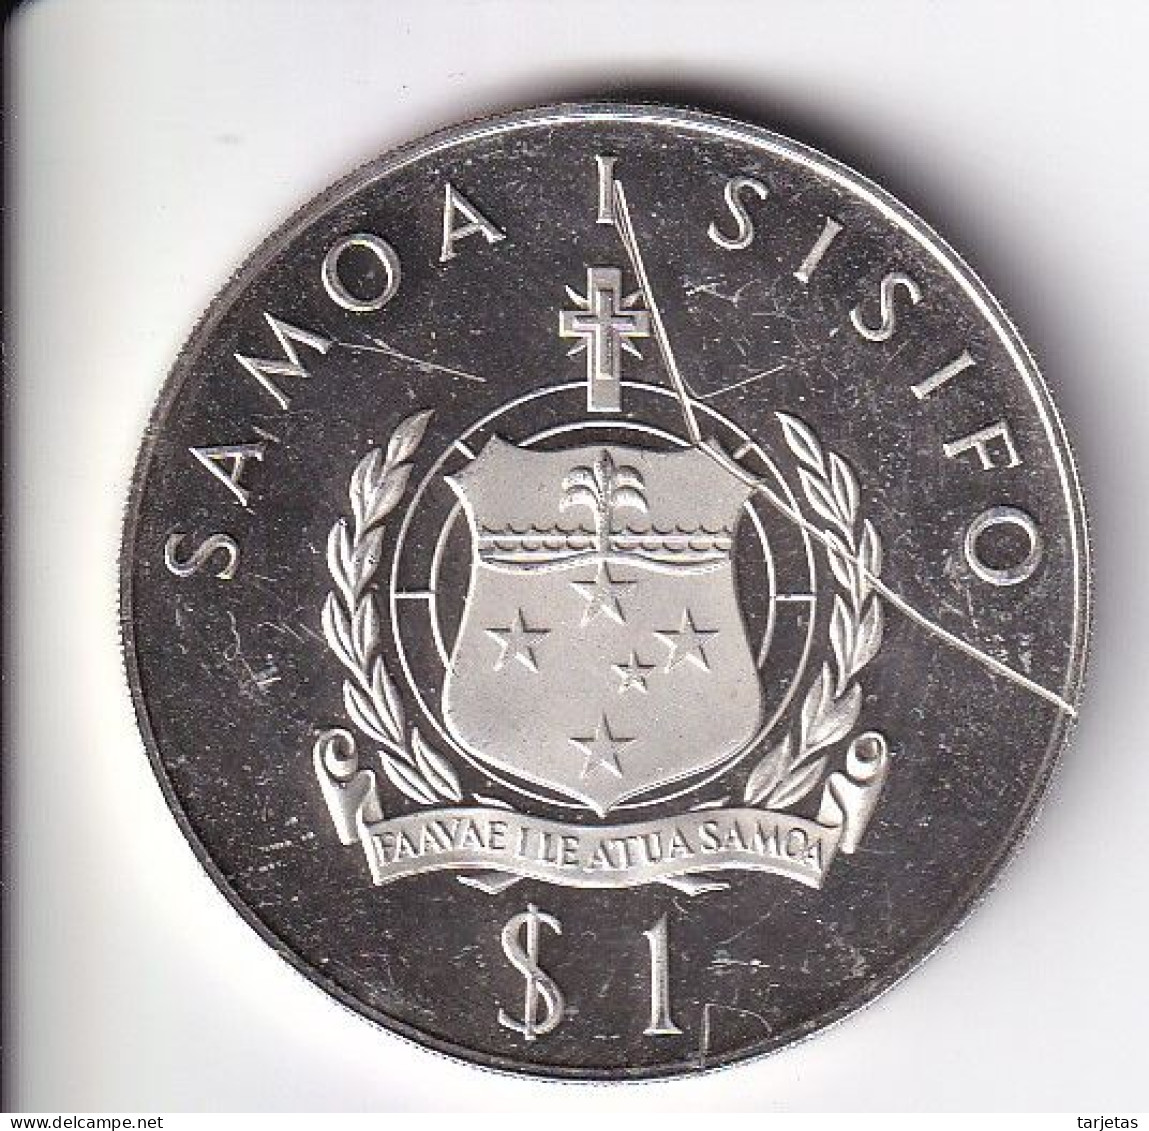 MONEDA DE PLATA DE SAMOA I SISIFO DE 1 DOLLAR DEL AÑO 1977 LINDBERGH FLIGHT - LA DE LA FOTO (CON RAYA DETRAS) - Amerikaans-Samoa